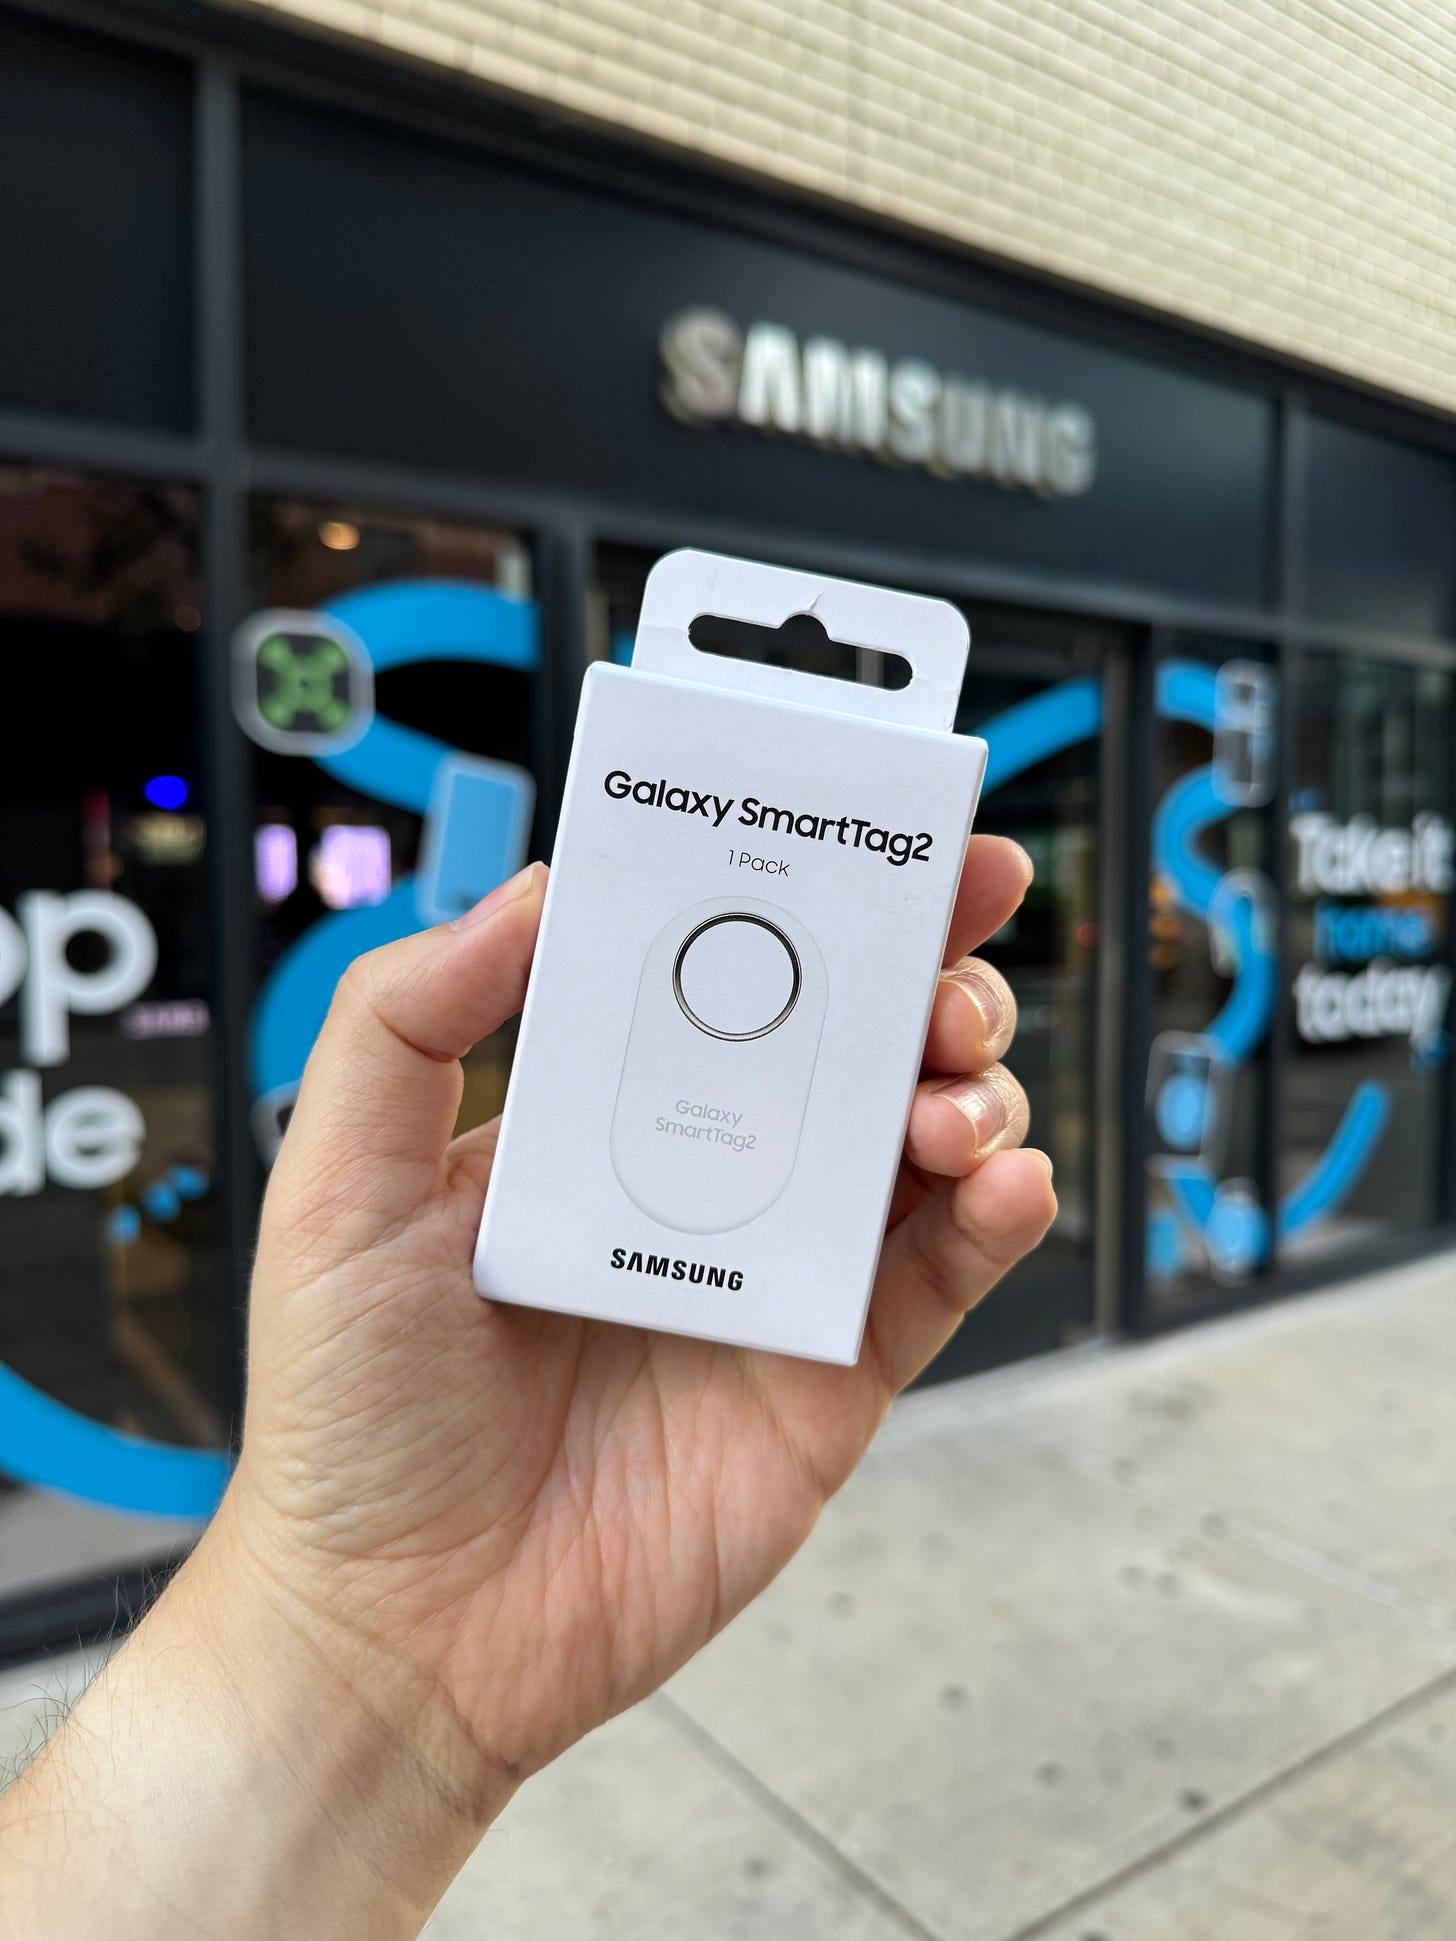 Samsung Galaxy SmartTag 2 tracker in the hands of Matt Swider